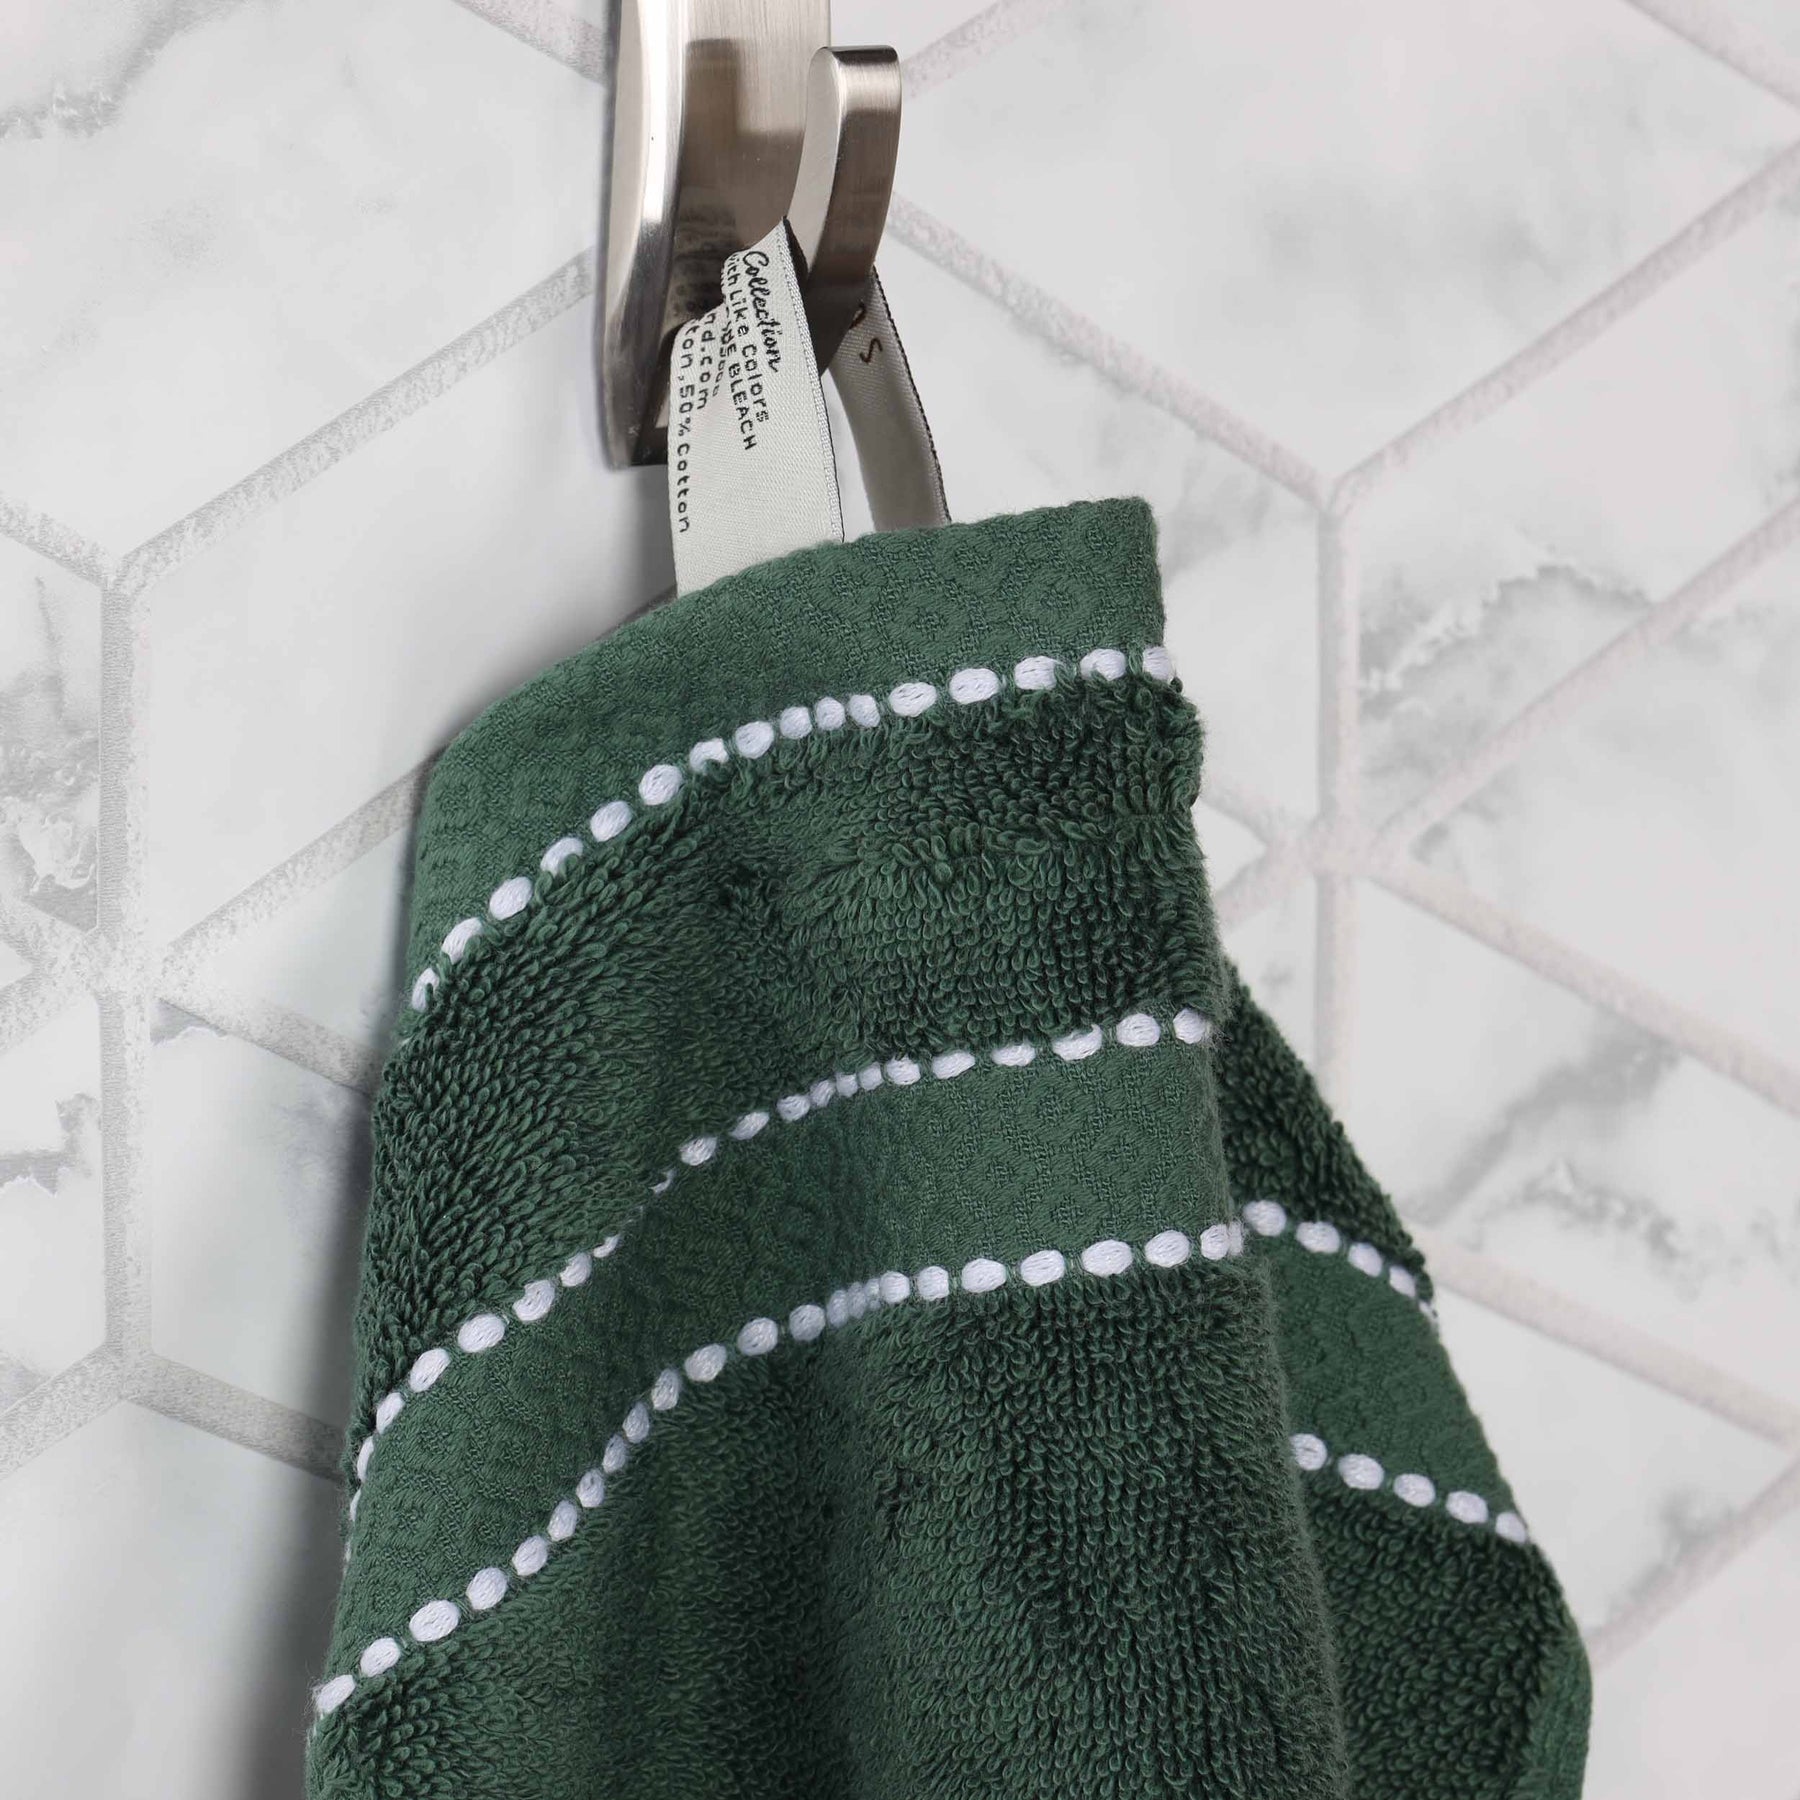 Niles Egyptian Giza Cotton Dobby Plush Face Towel Washcloth - Forest Green